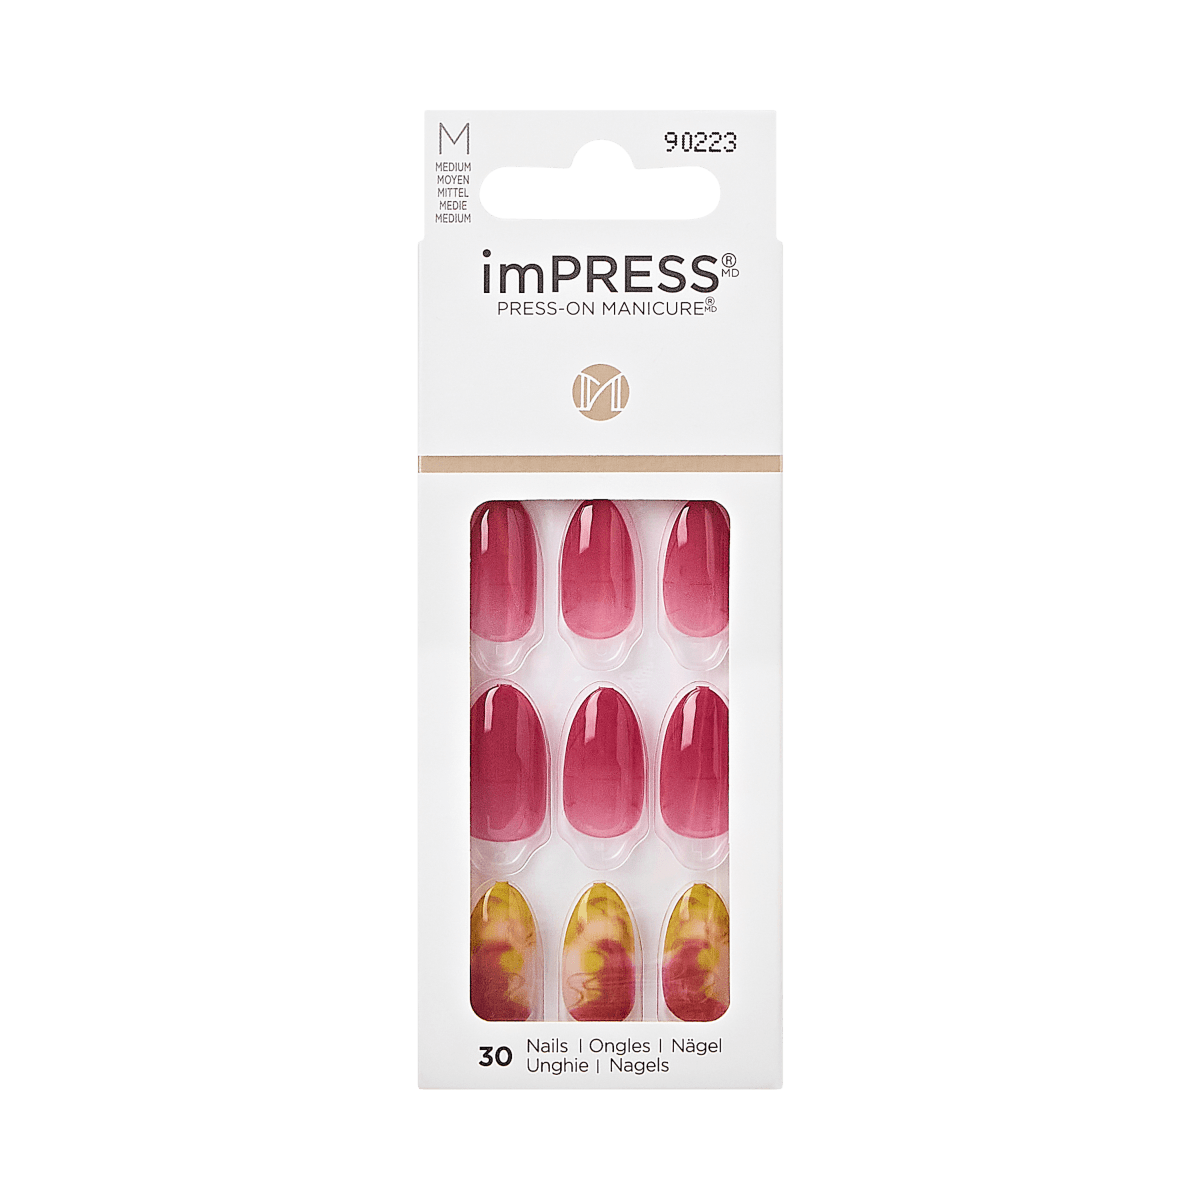 imPRESS Press-On Manicure- Day and Night